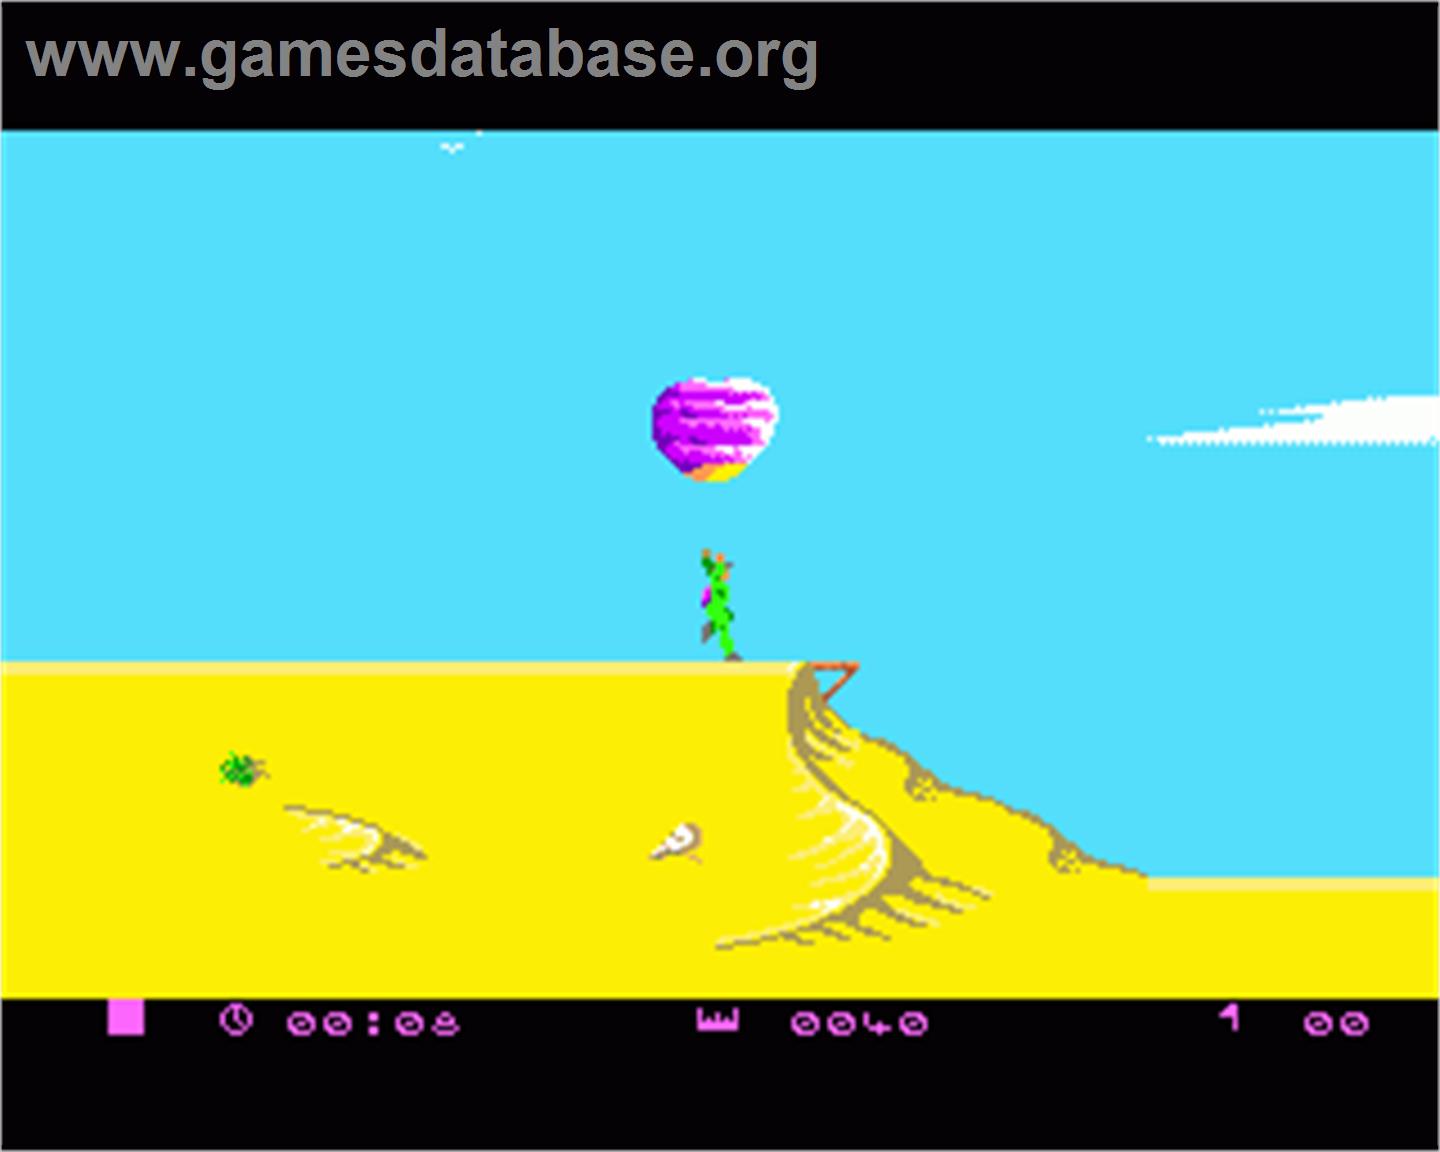 Paragliding - Commodore Amiga - Artwork - In Game